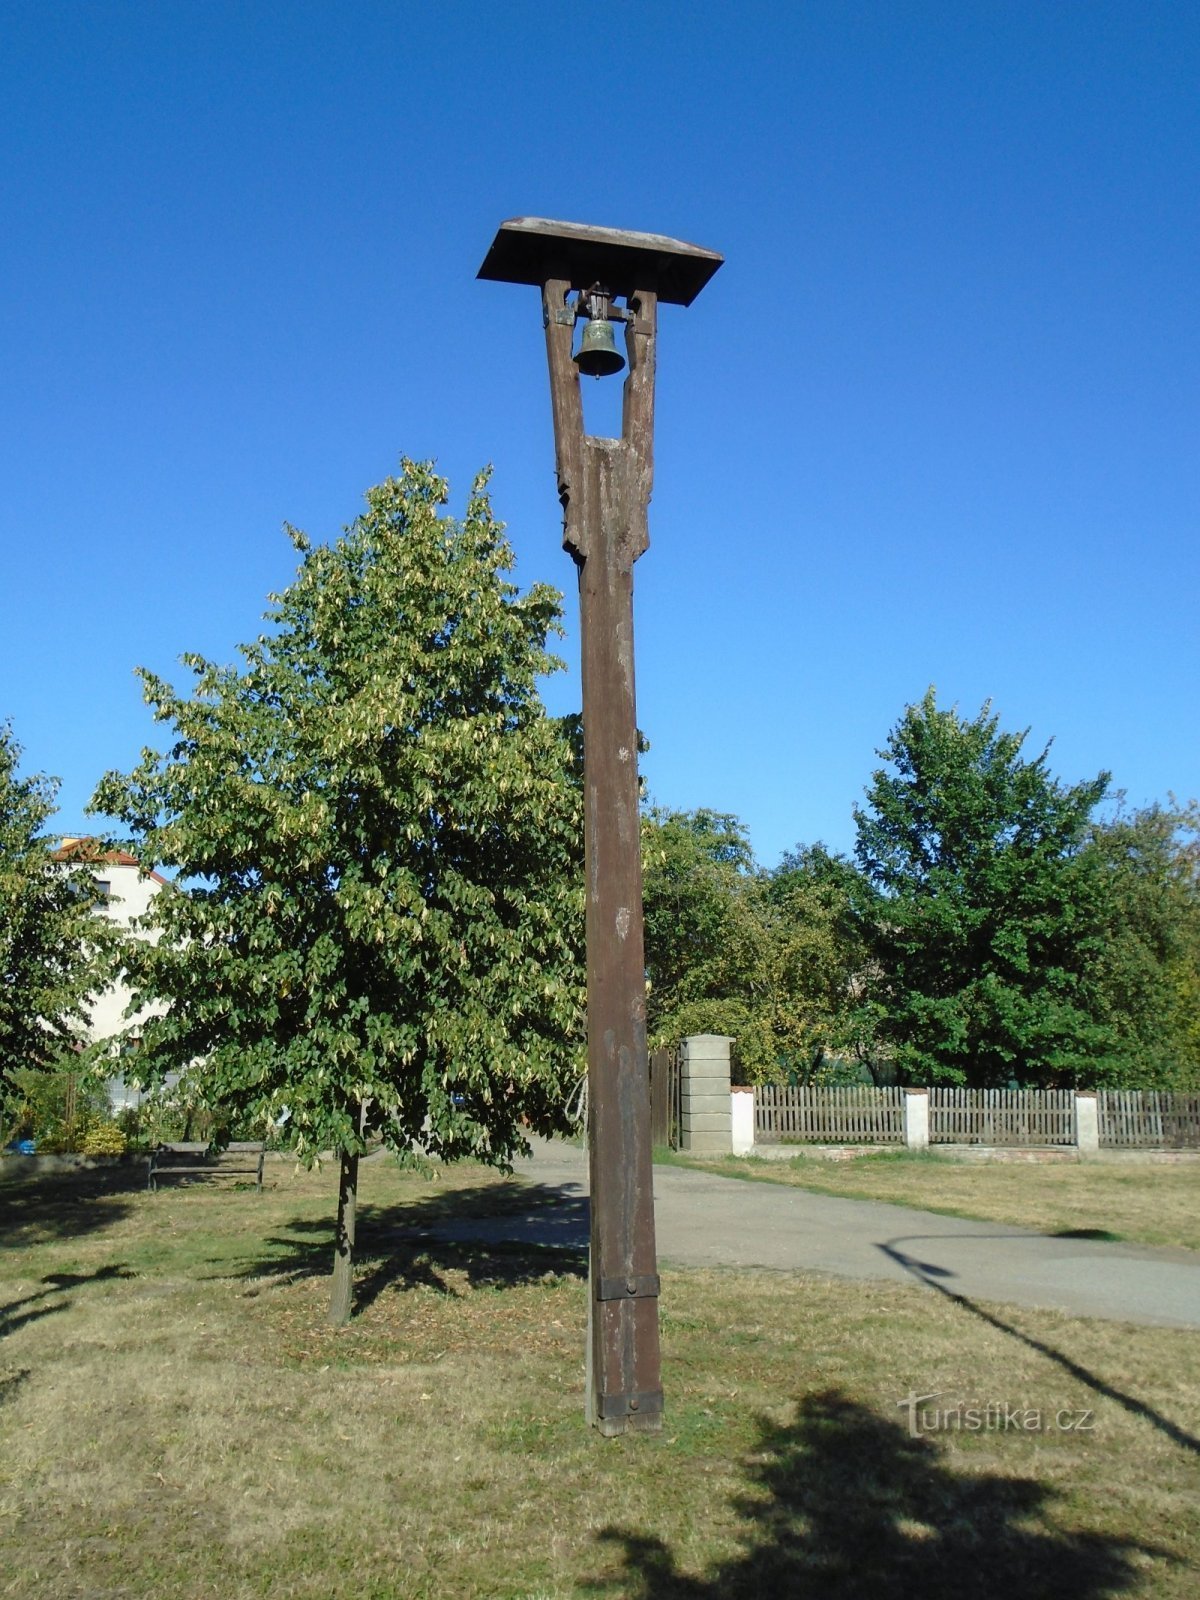 Tháp chuông ở Piletice (Hradec Králové, ngày 6.8.2018 tháng XNUMX năm XNUMX)